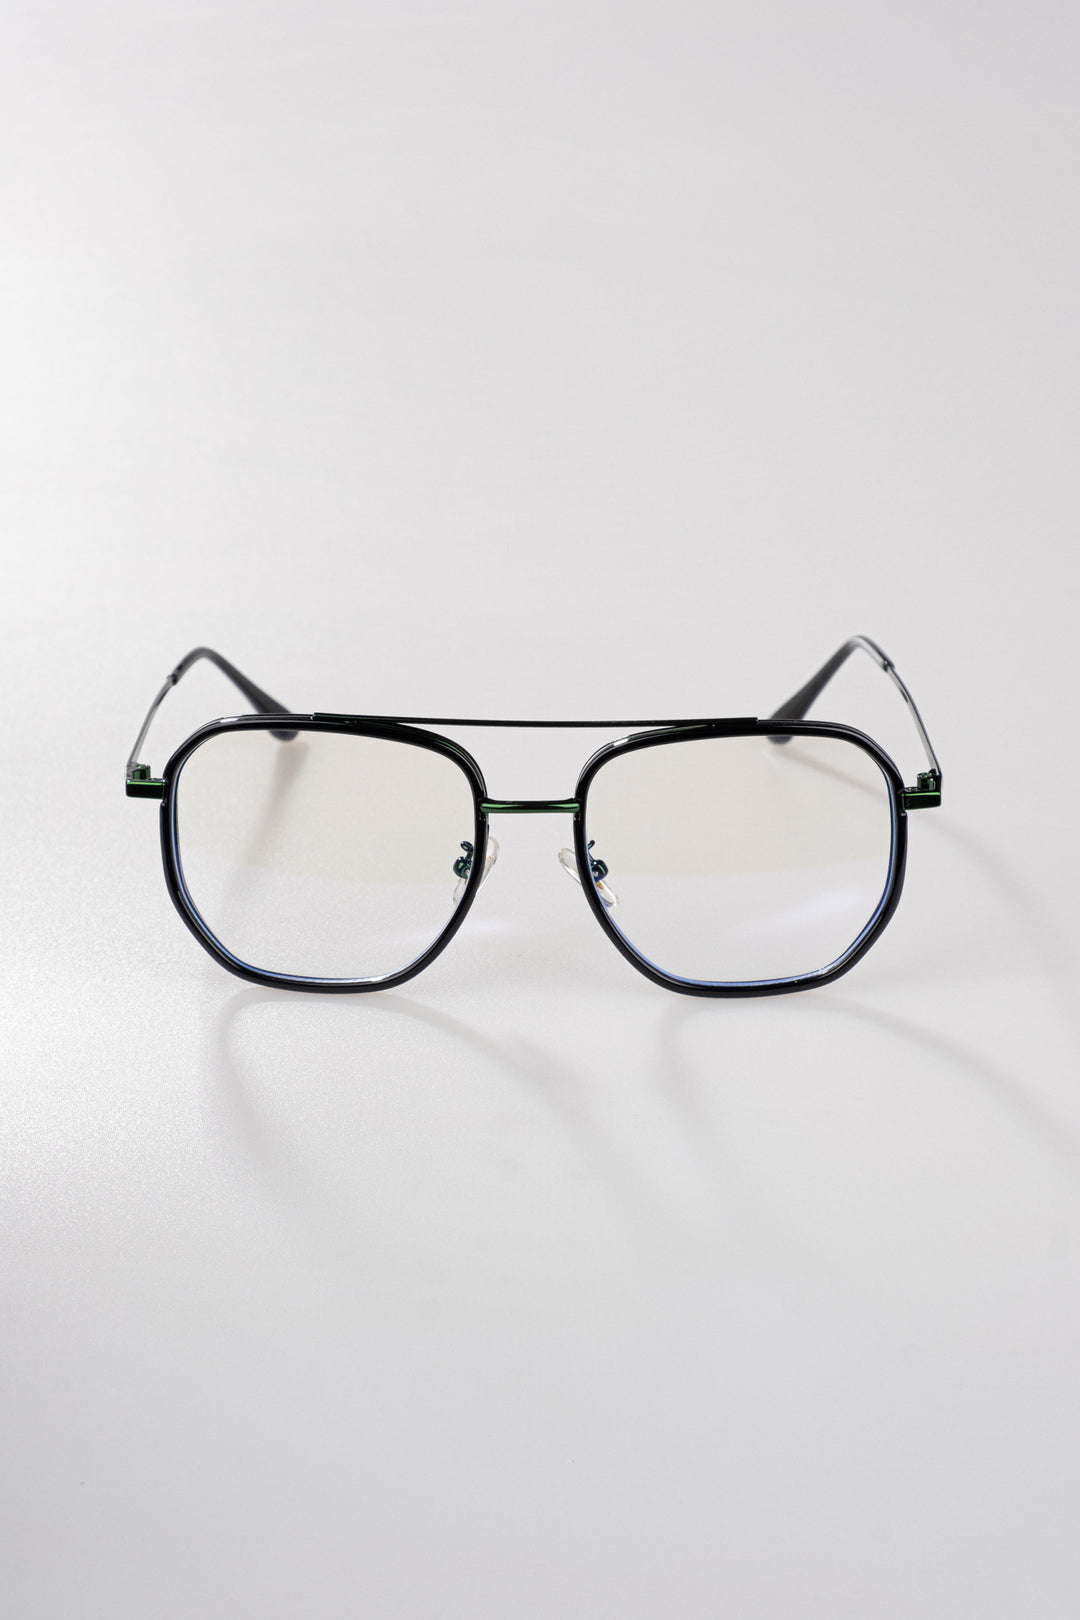 Dıandora Blue Light Protection Glasses